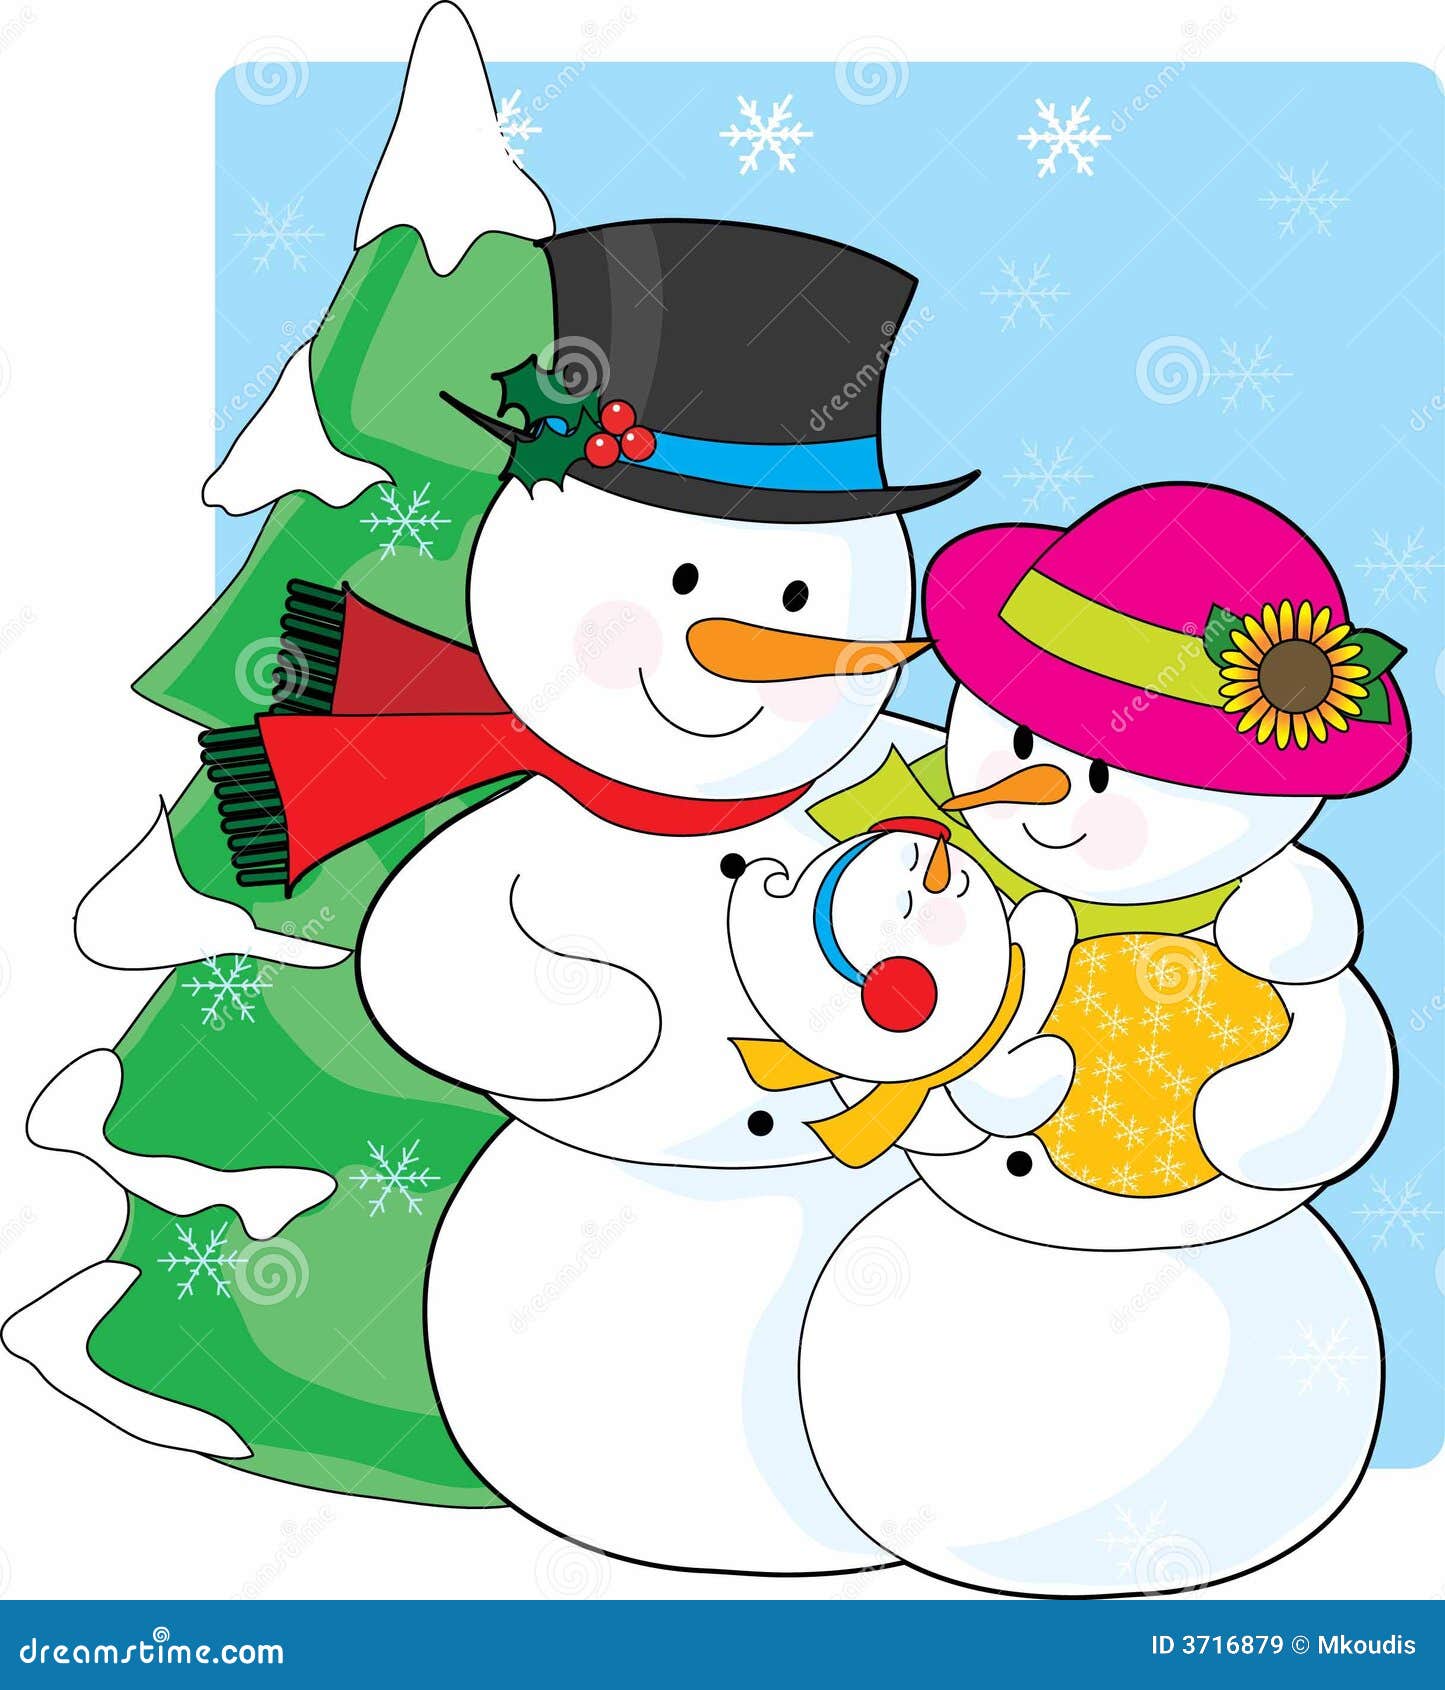 Snowman Family Clipart